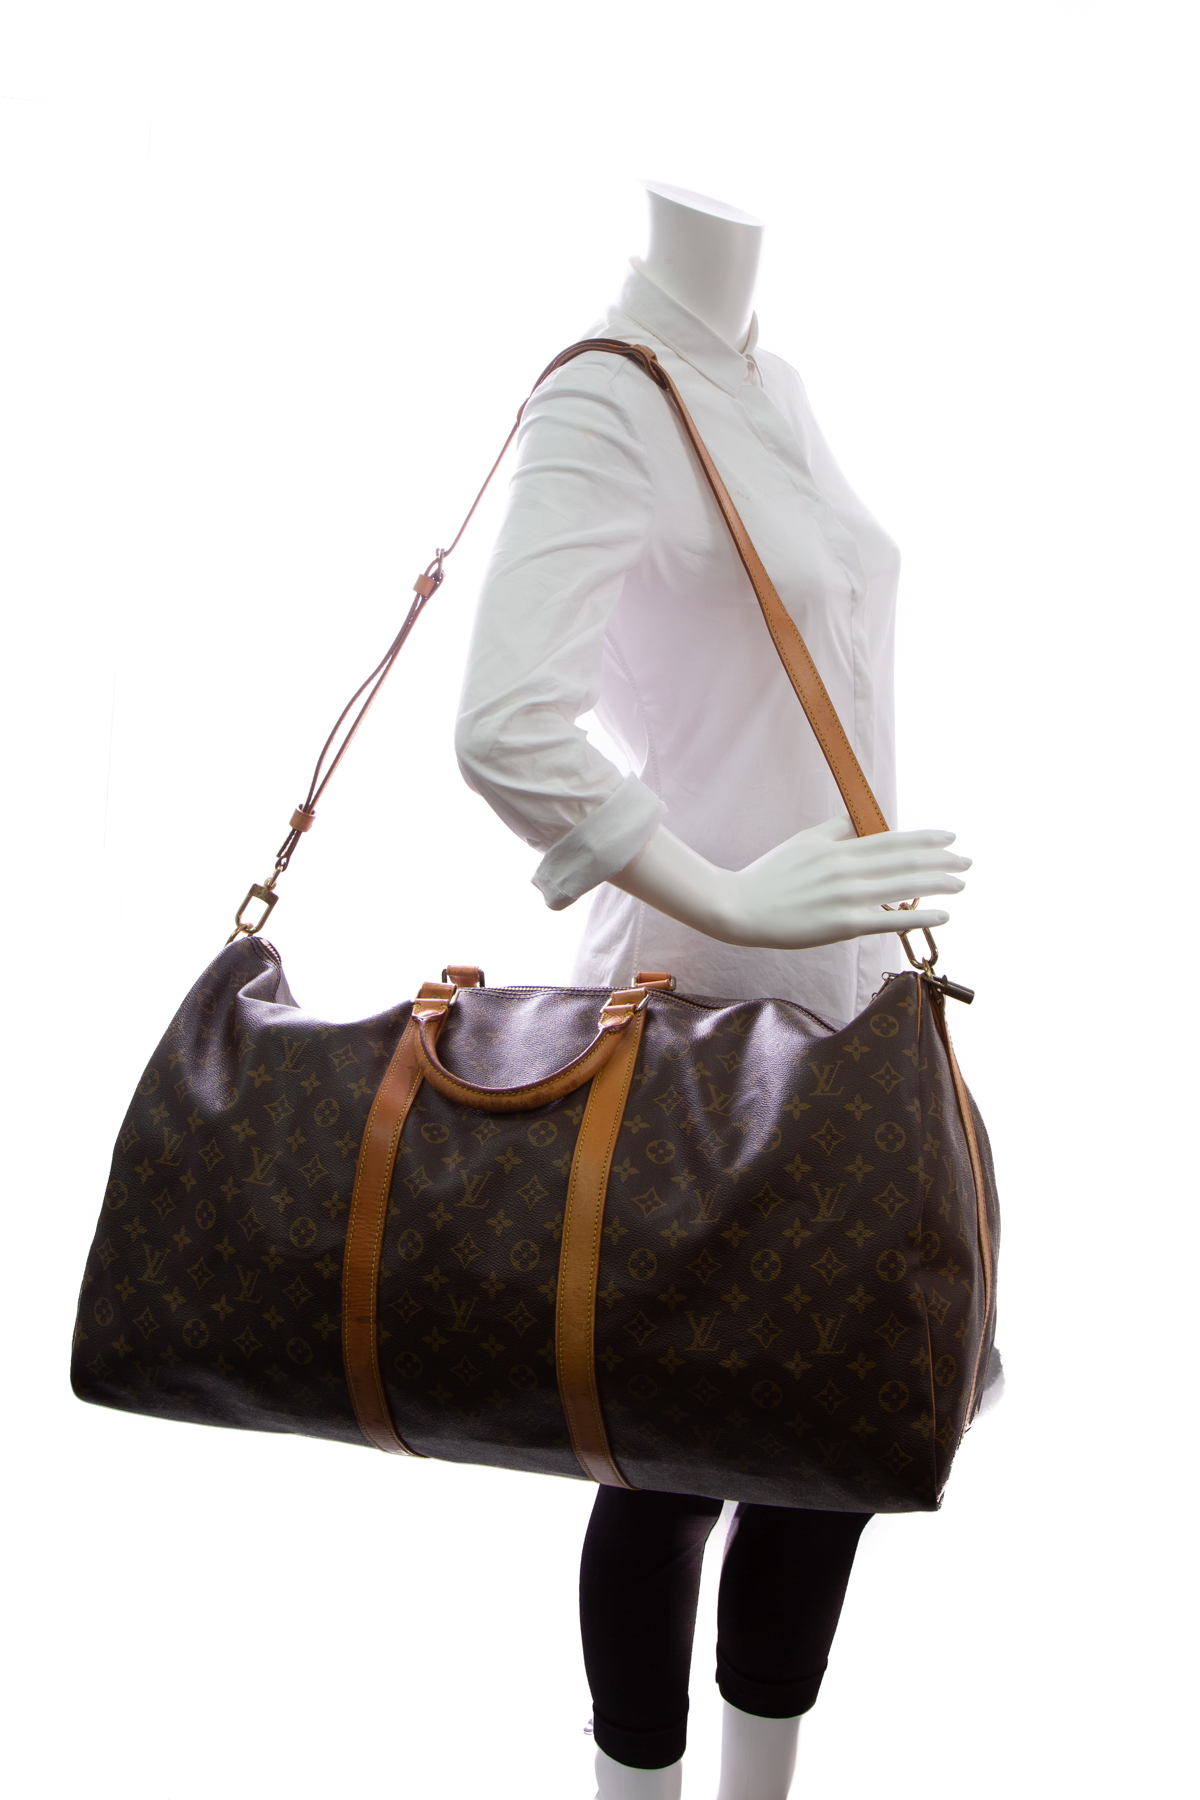 Louis Vuitton Keepall 60 - Vintage Handbag